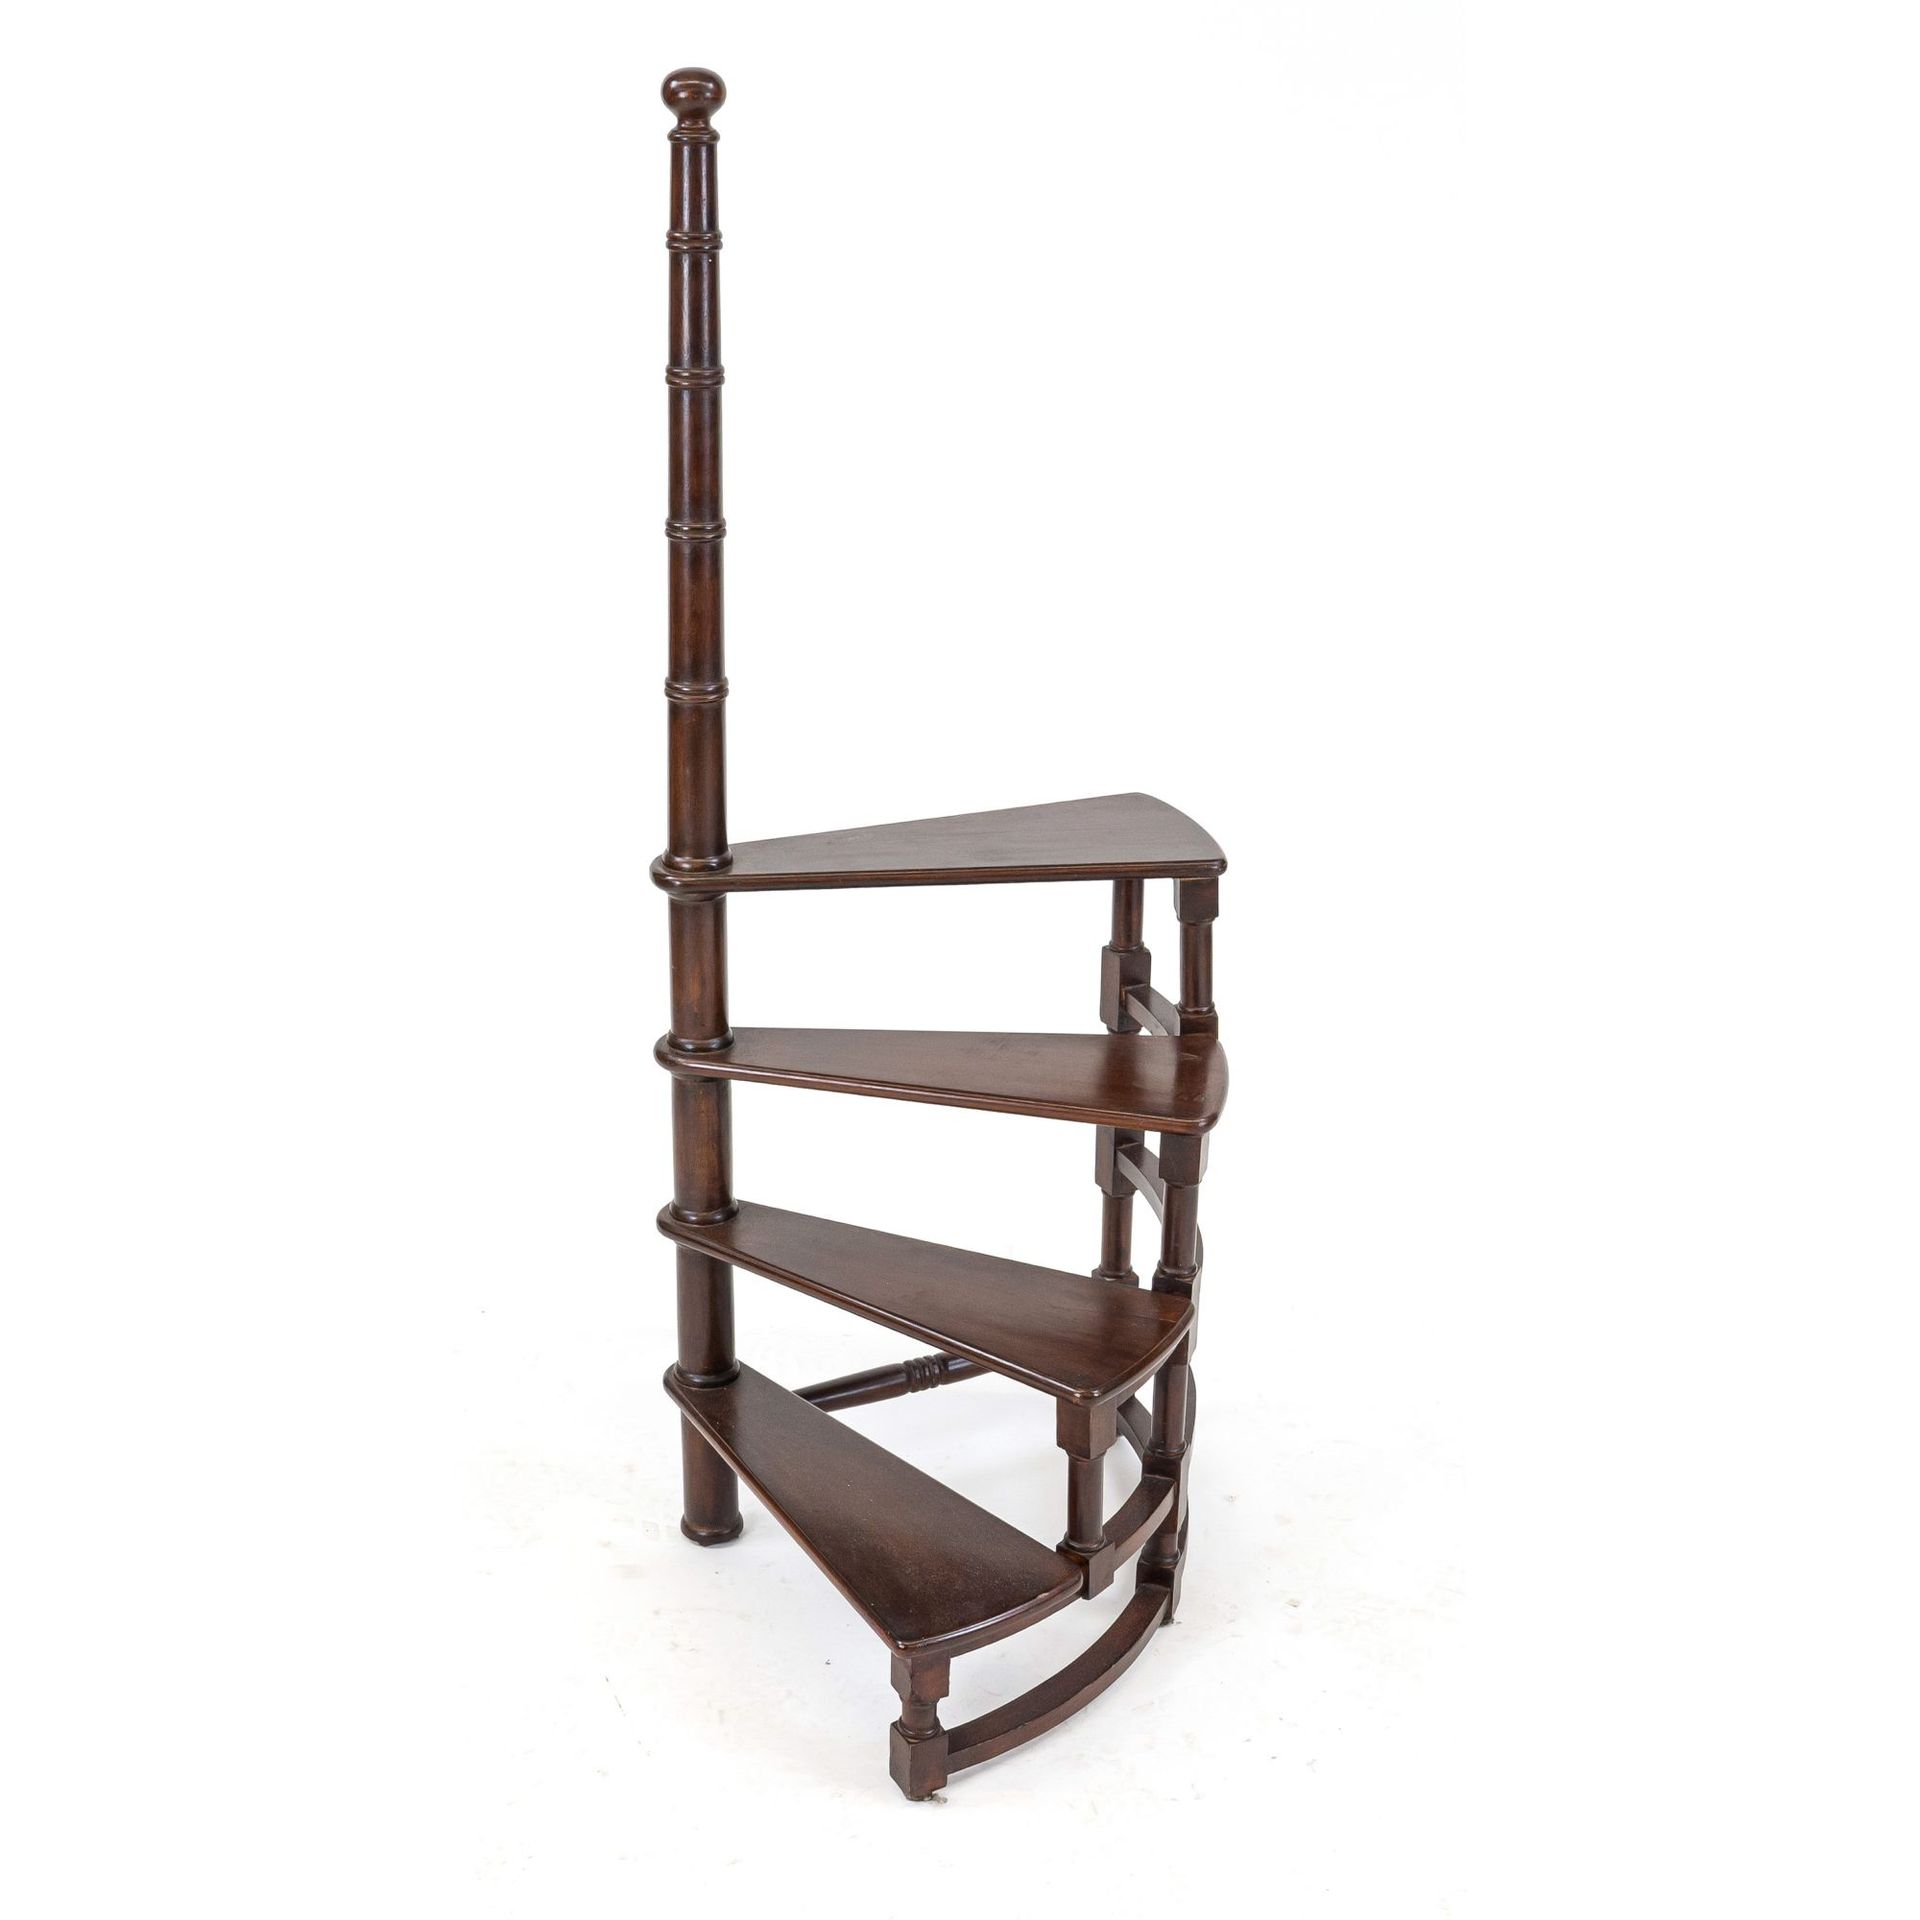 Null Library ladder, England 20th century, mahogany, 124 x 47 x 60 cm